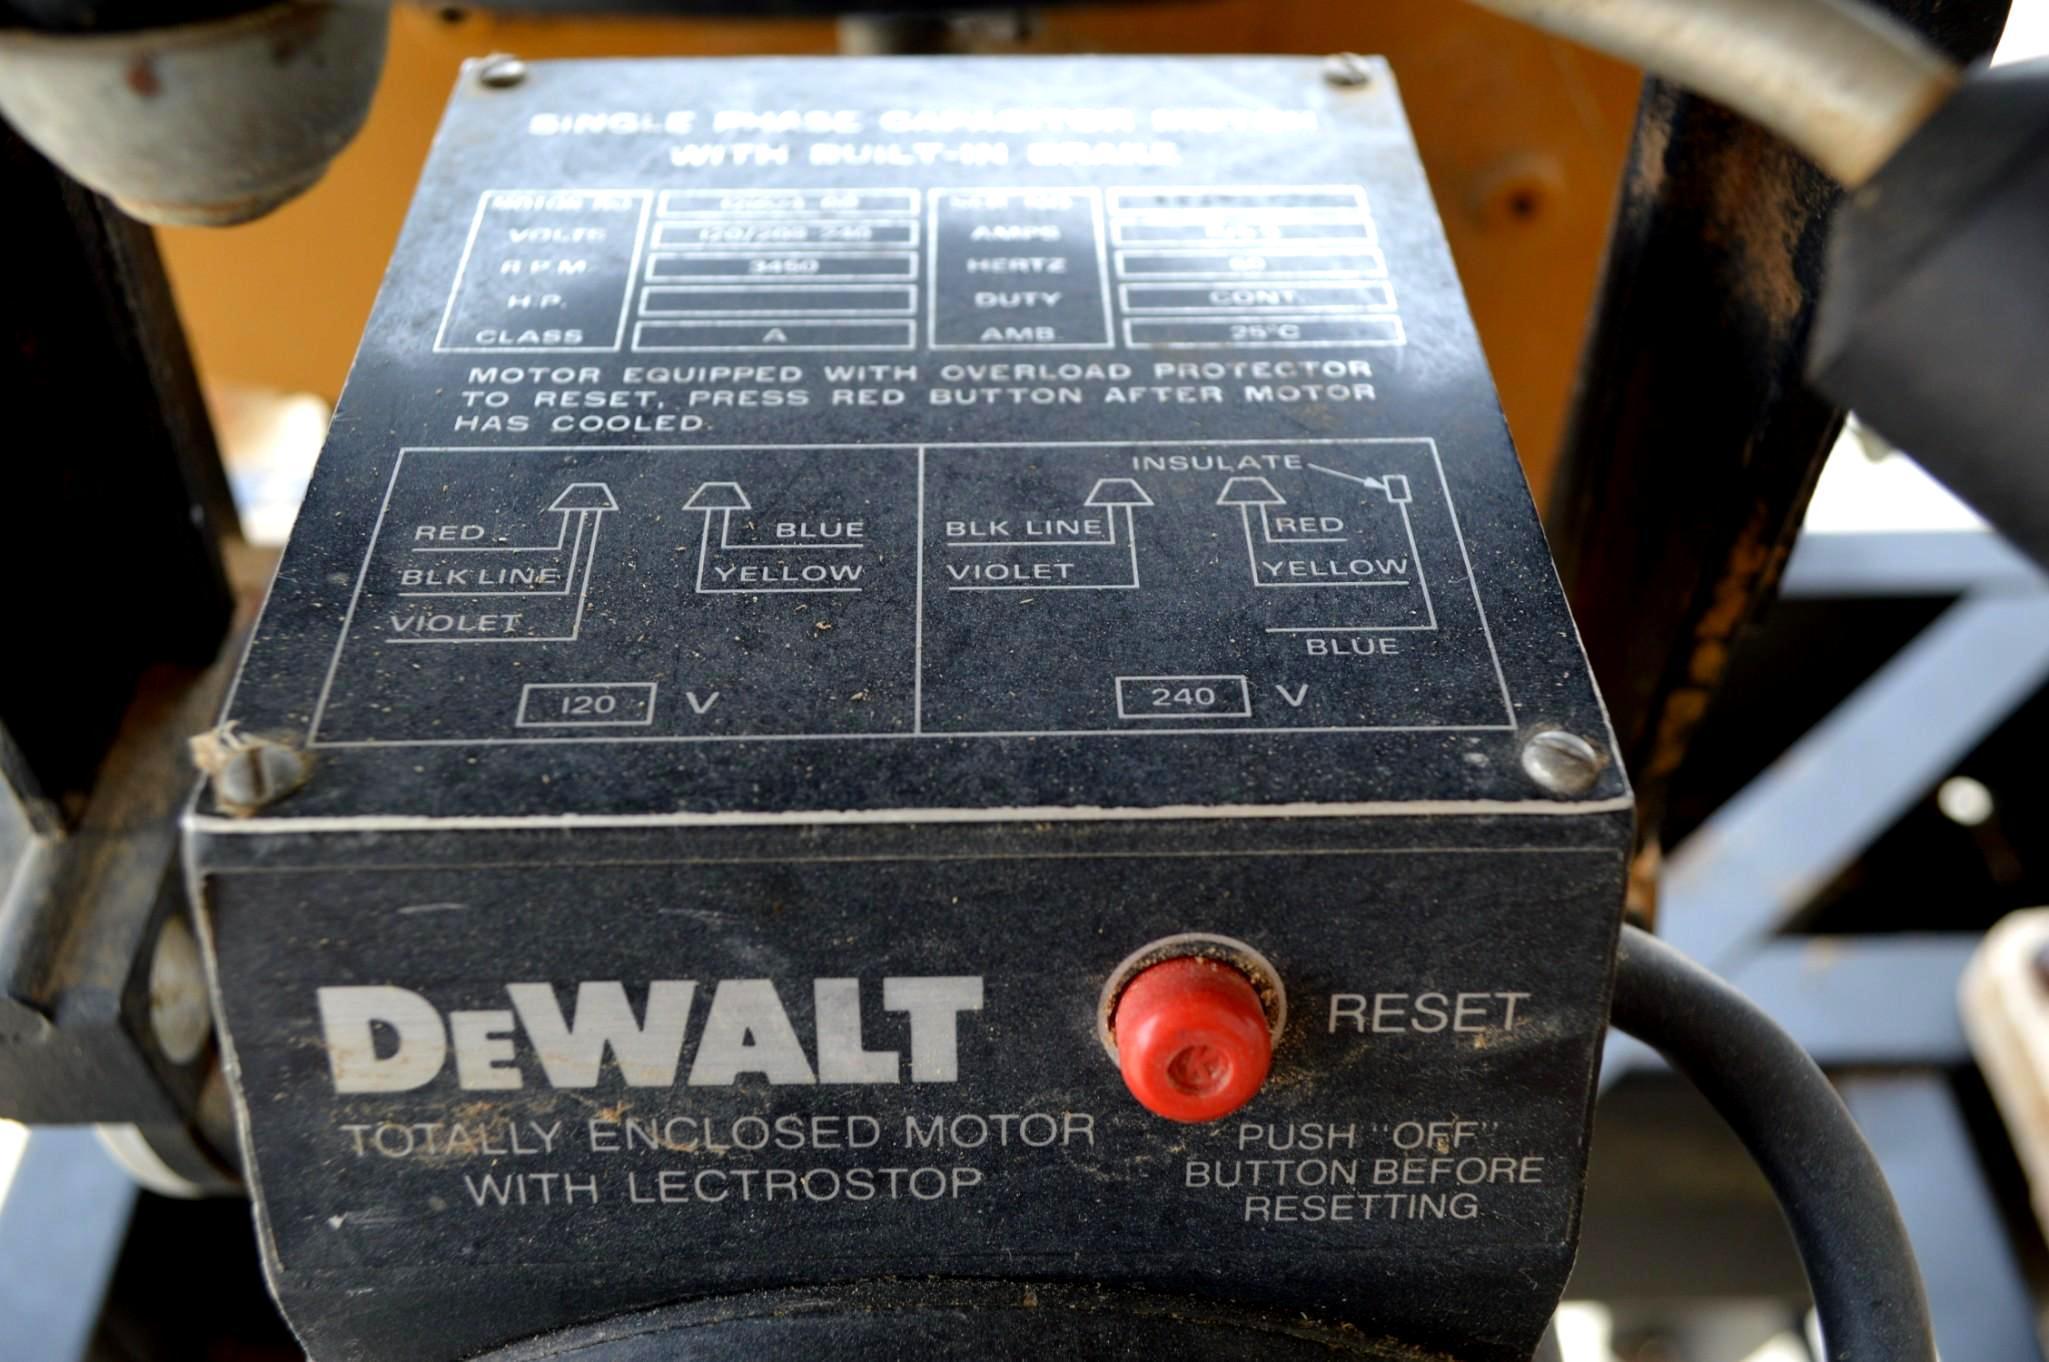 Dewalt 7770 lectroscope Radial Saw, 2 1/4hp - Dual Voltage